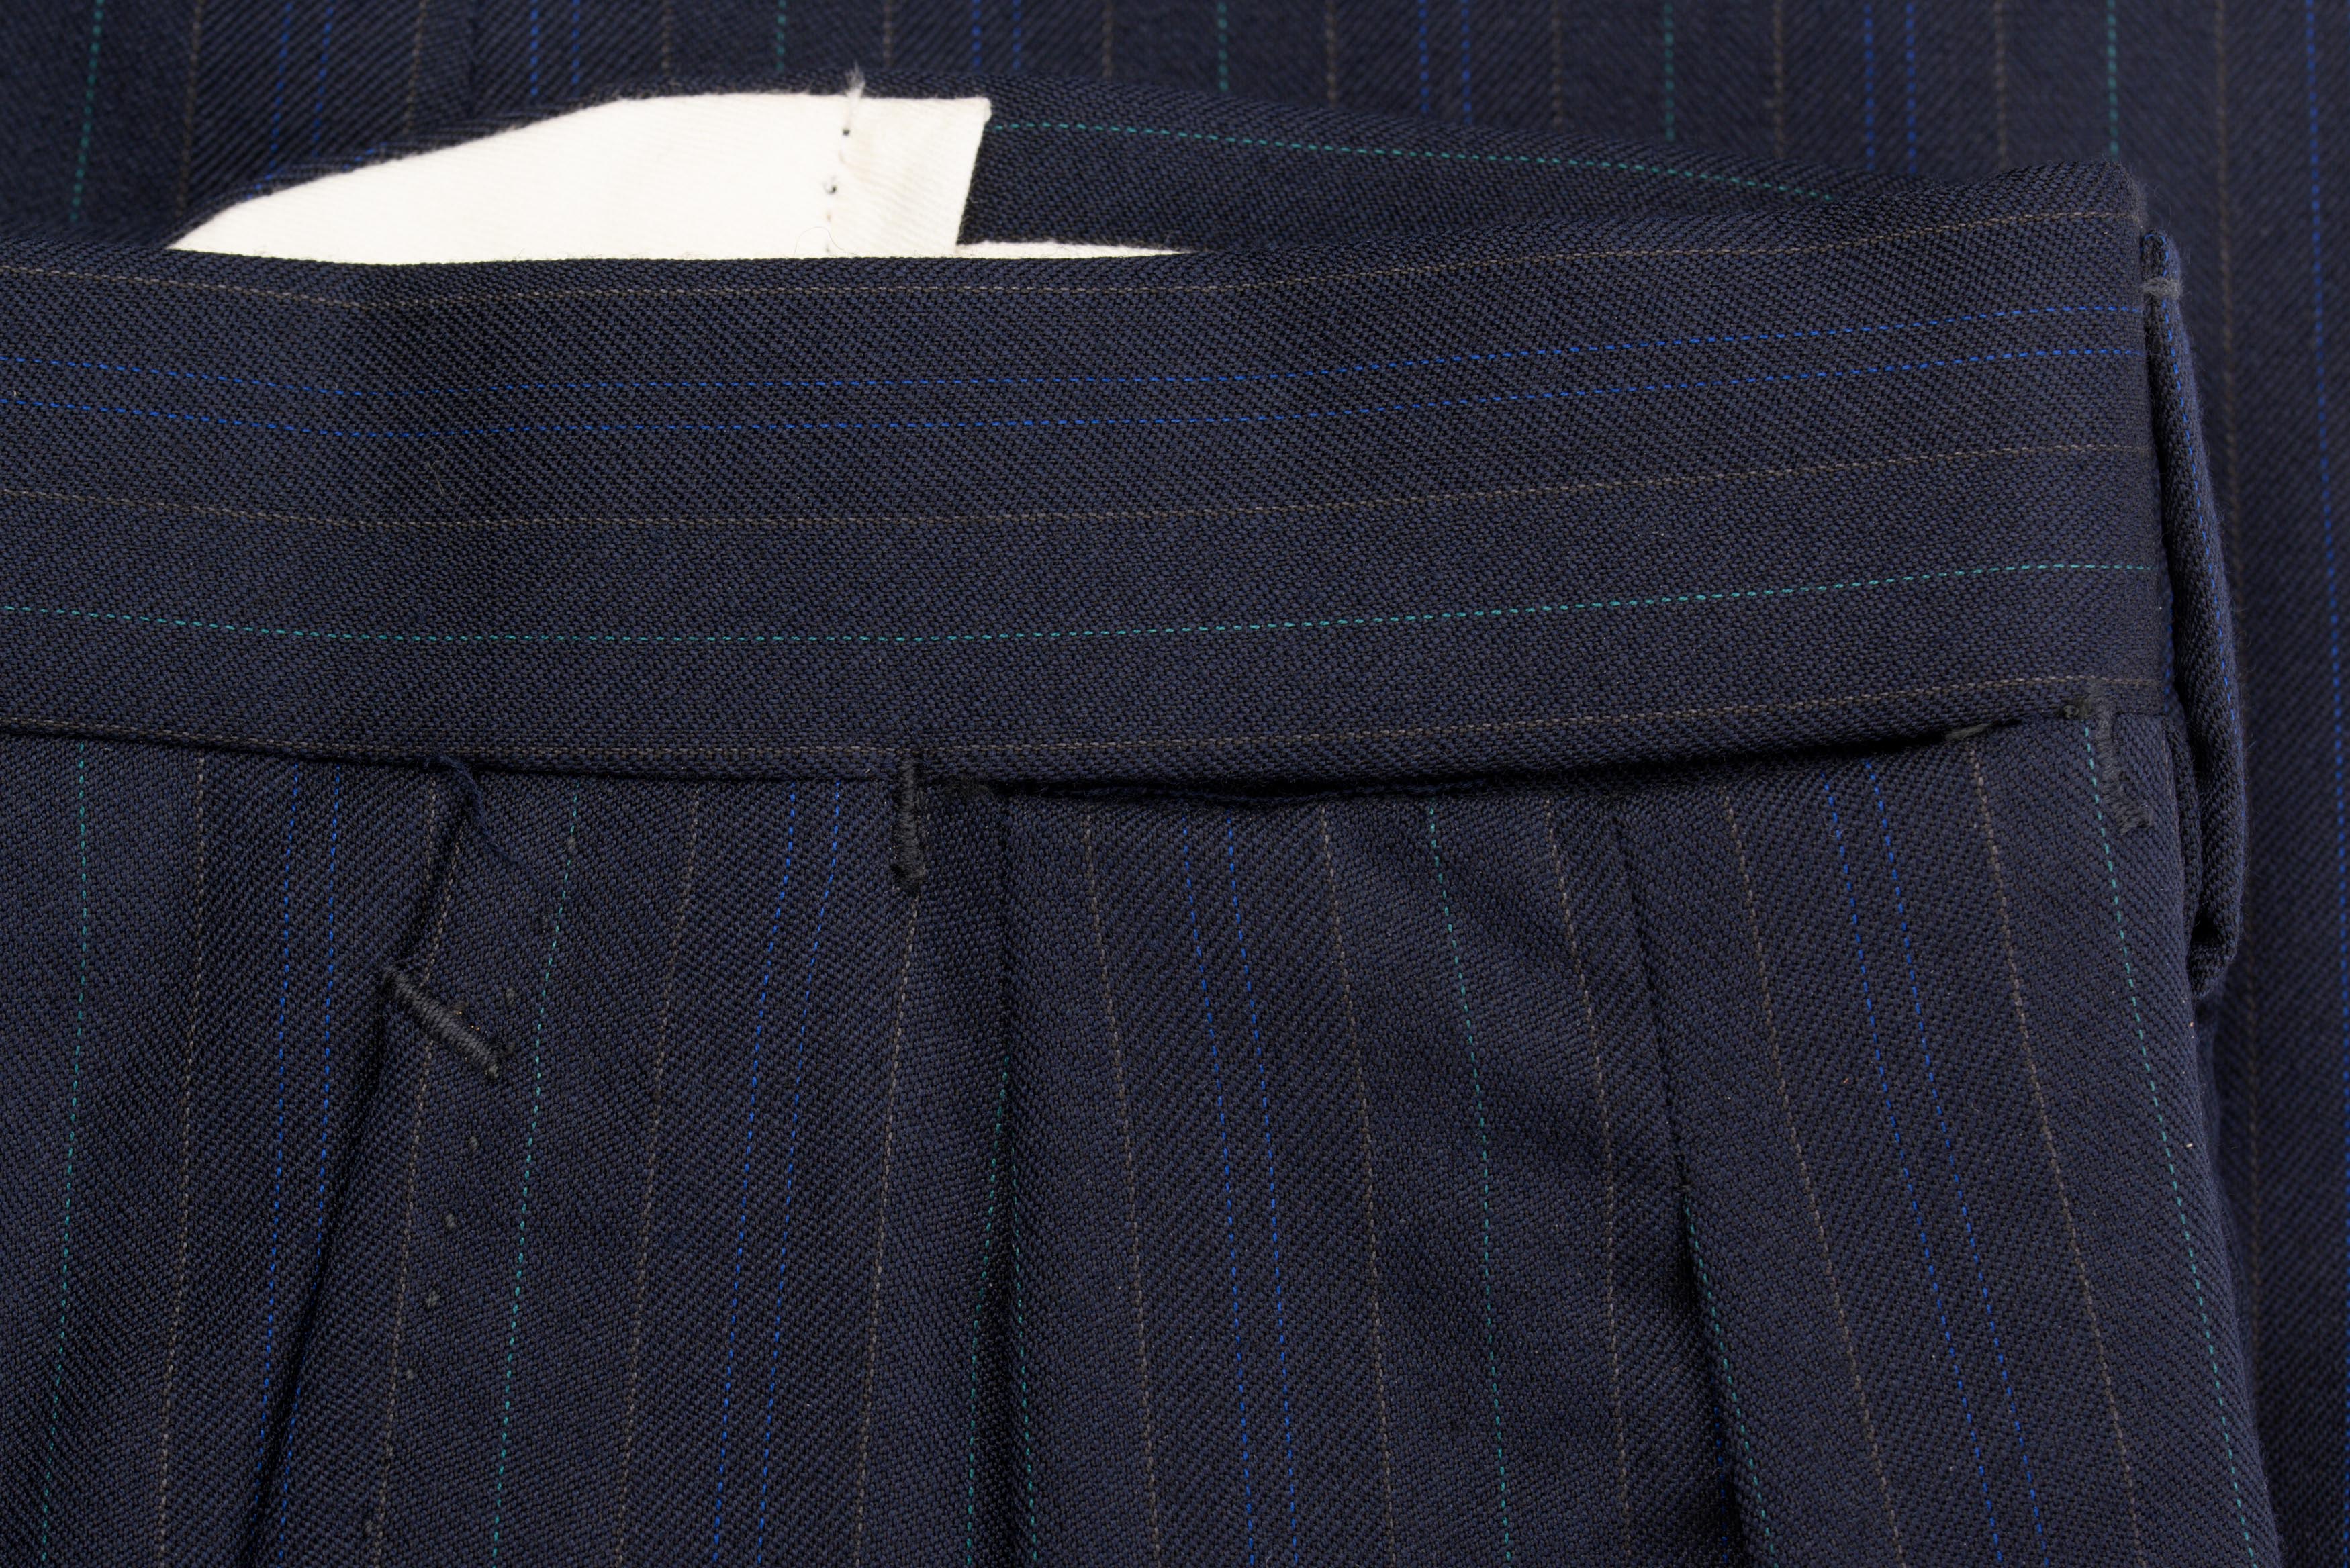 D'AVENZA Roma Navy Blue Striped Wool DP Dress Pants EU 52 NEW US 36 Portly Fit